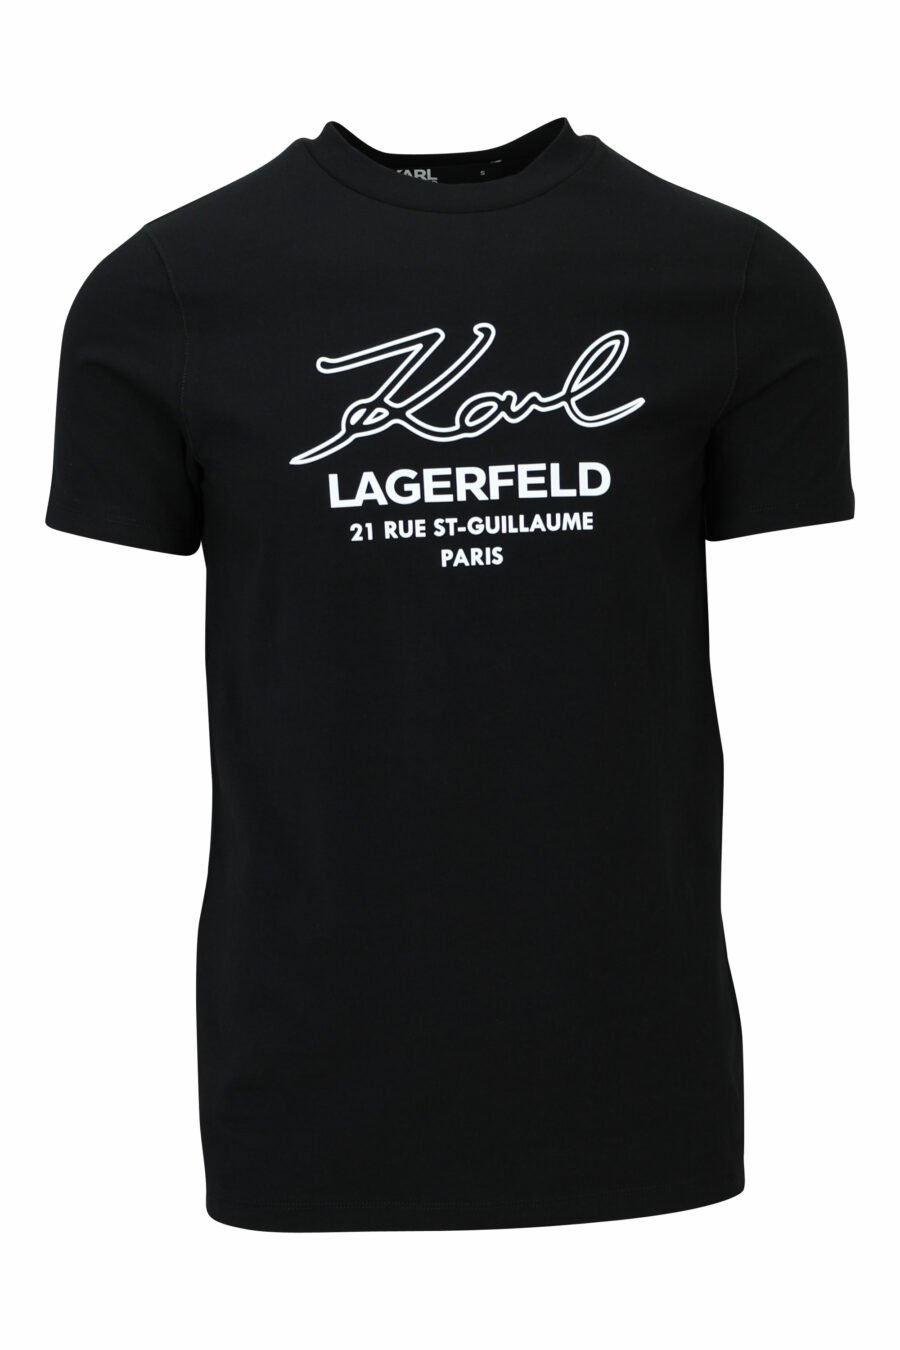 Camiseta negra con maxilogo firma delineado "rue st guillaume" - 4062226958608